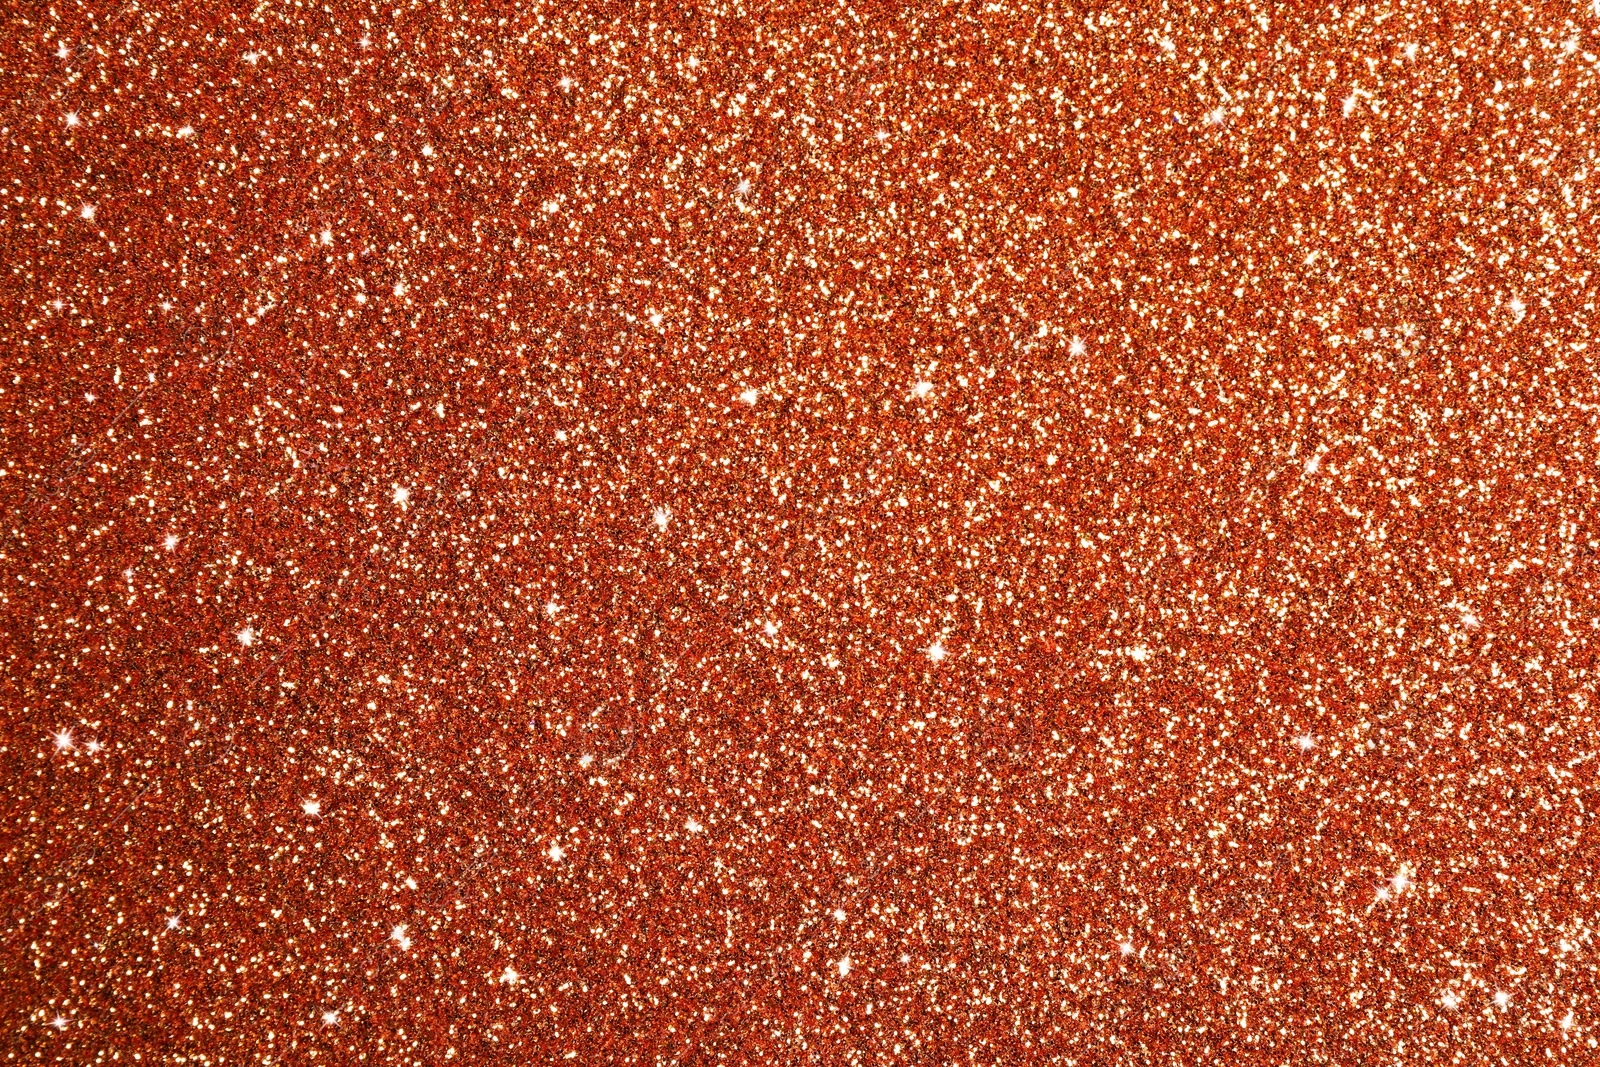 Image of Beautiful shiny copper glitter as background, closeup